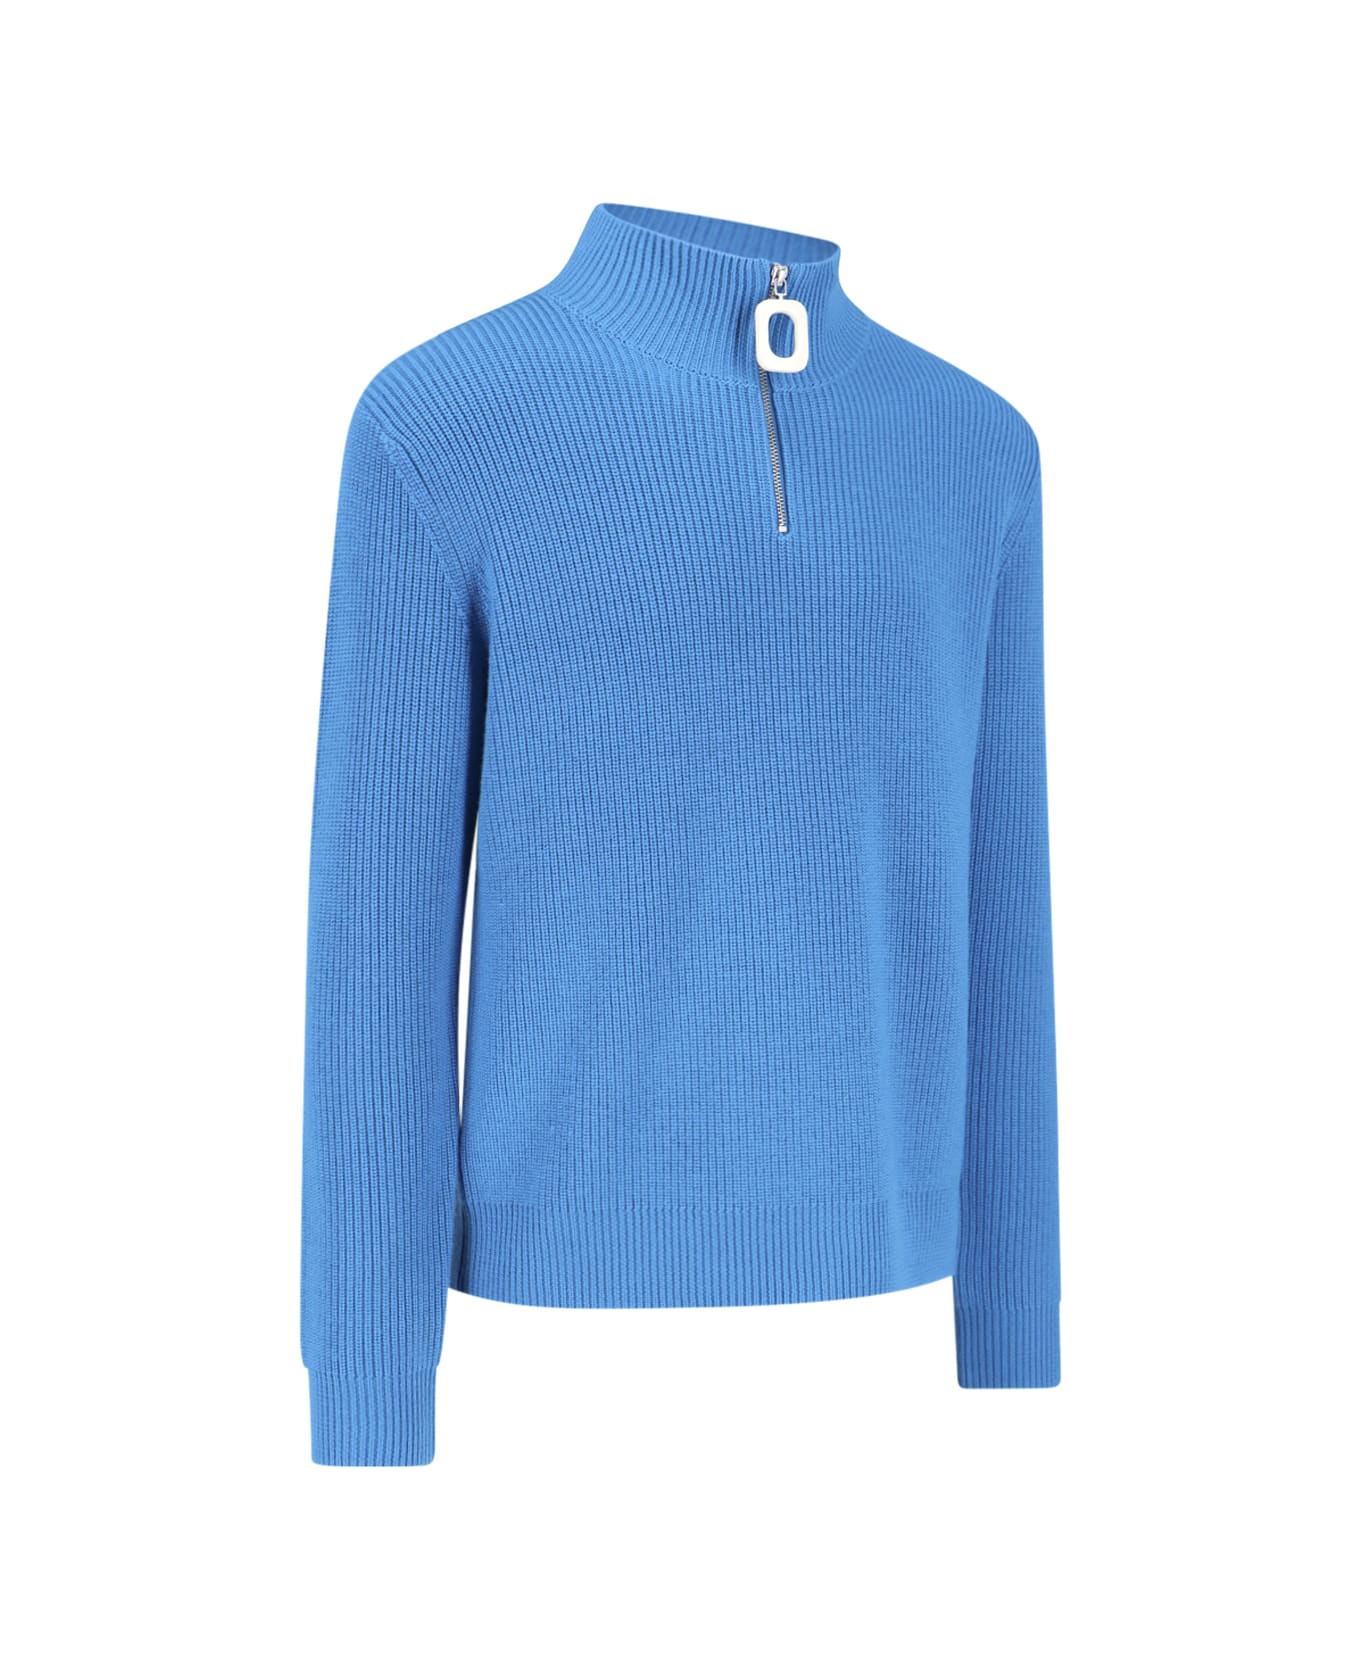 J.W. Anderson High Neck Sweater - Light Blue